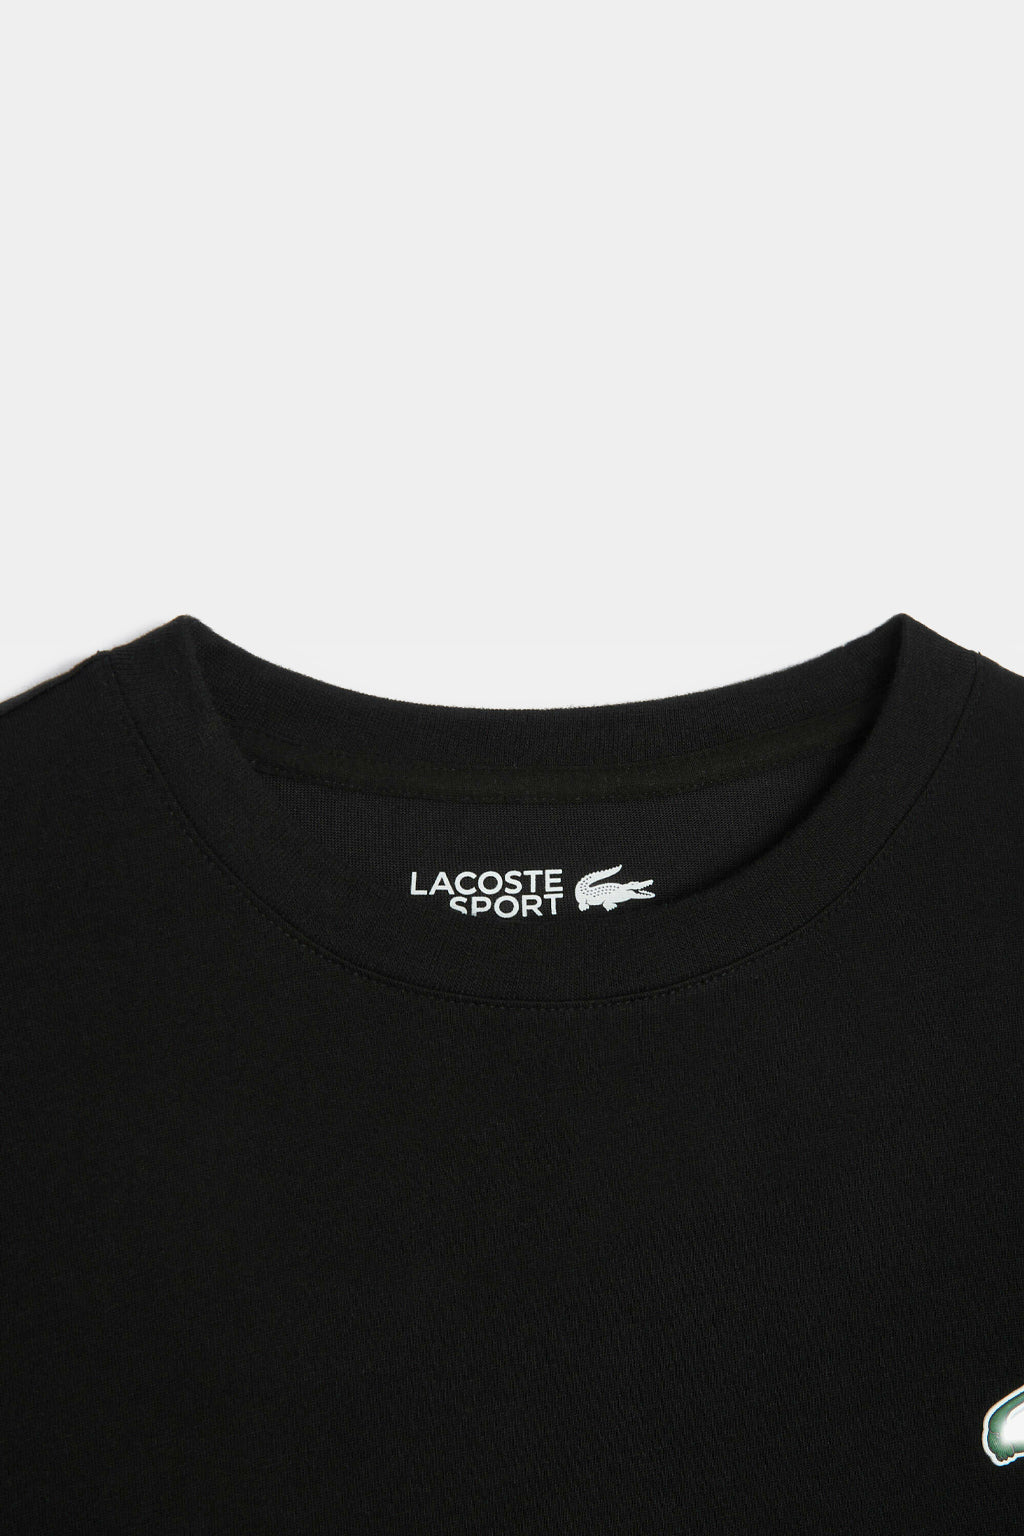 Lacoste Sport Live Long Sleeve T-Shirt